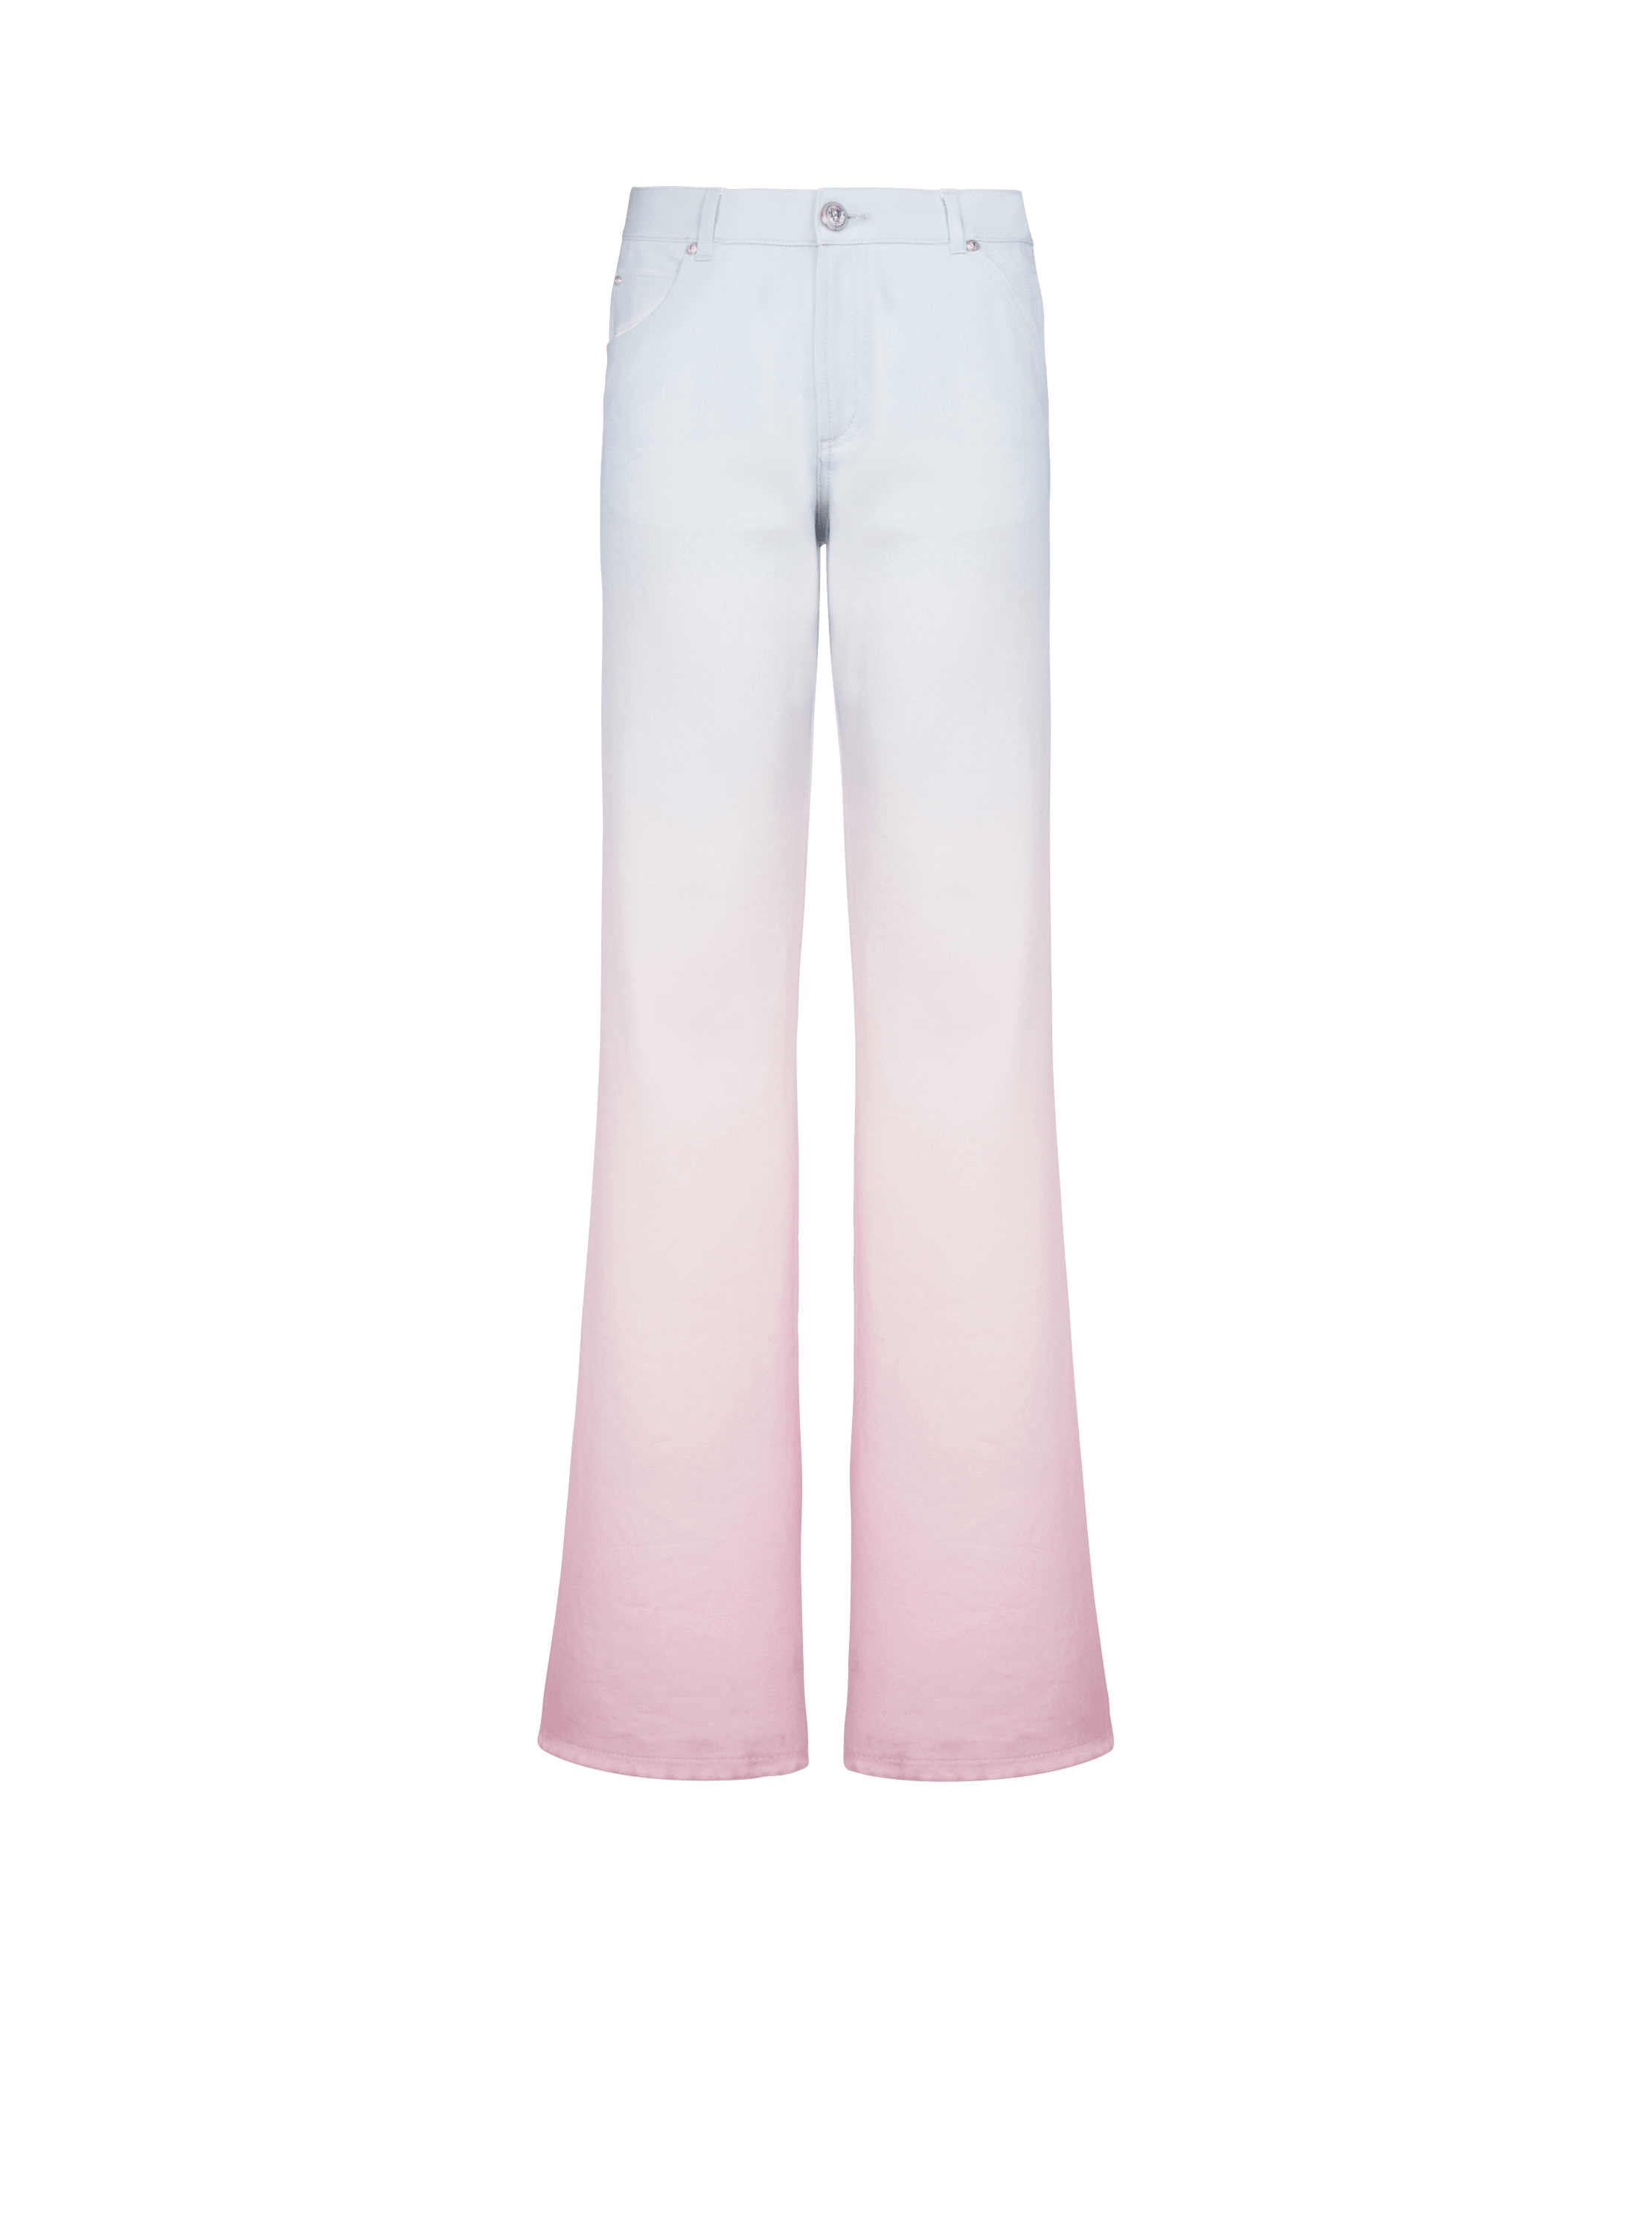 Balmain x Evian - Jean large, multicolore, hi-res